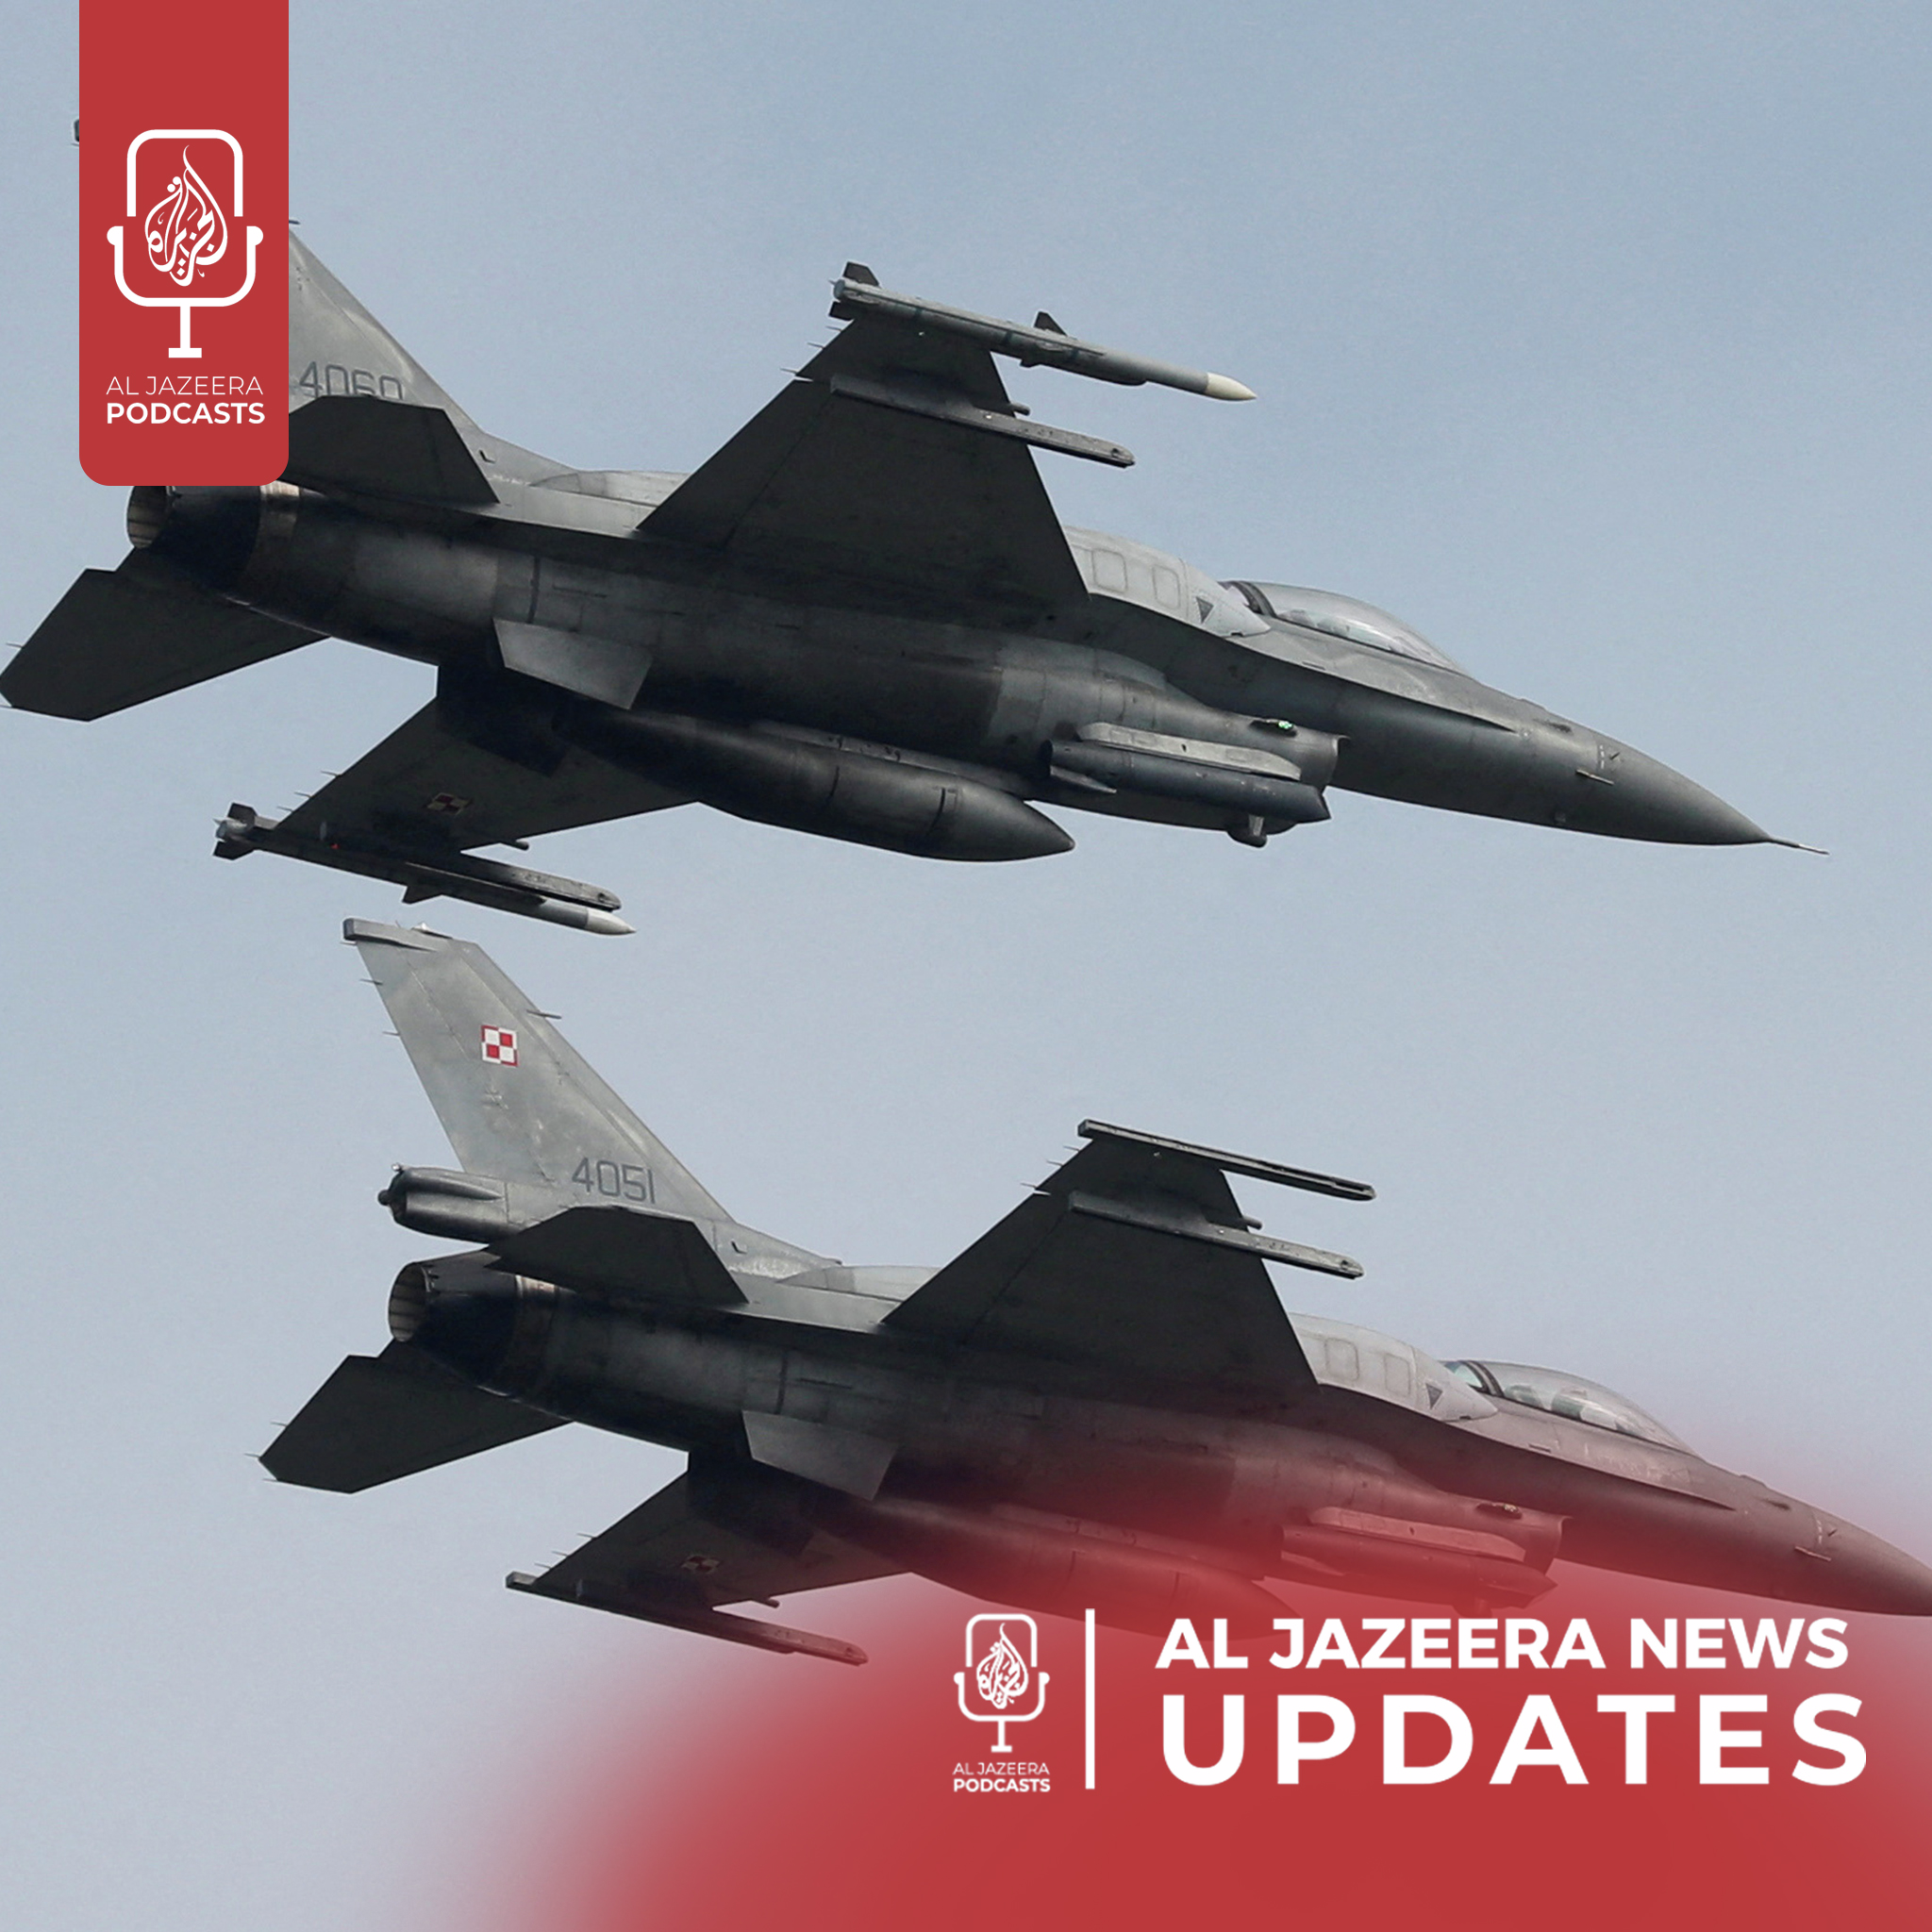 Norway F-16 donation to Ukraine, Israeli attacks target schools in Gaza